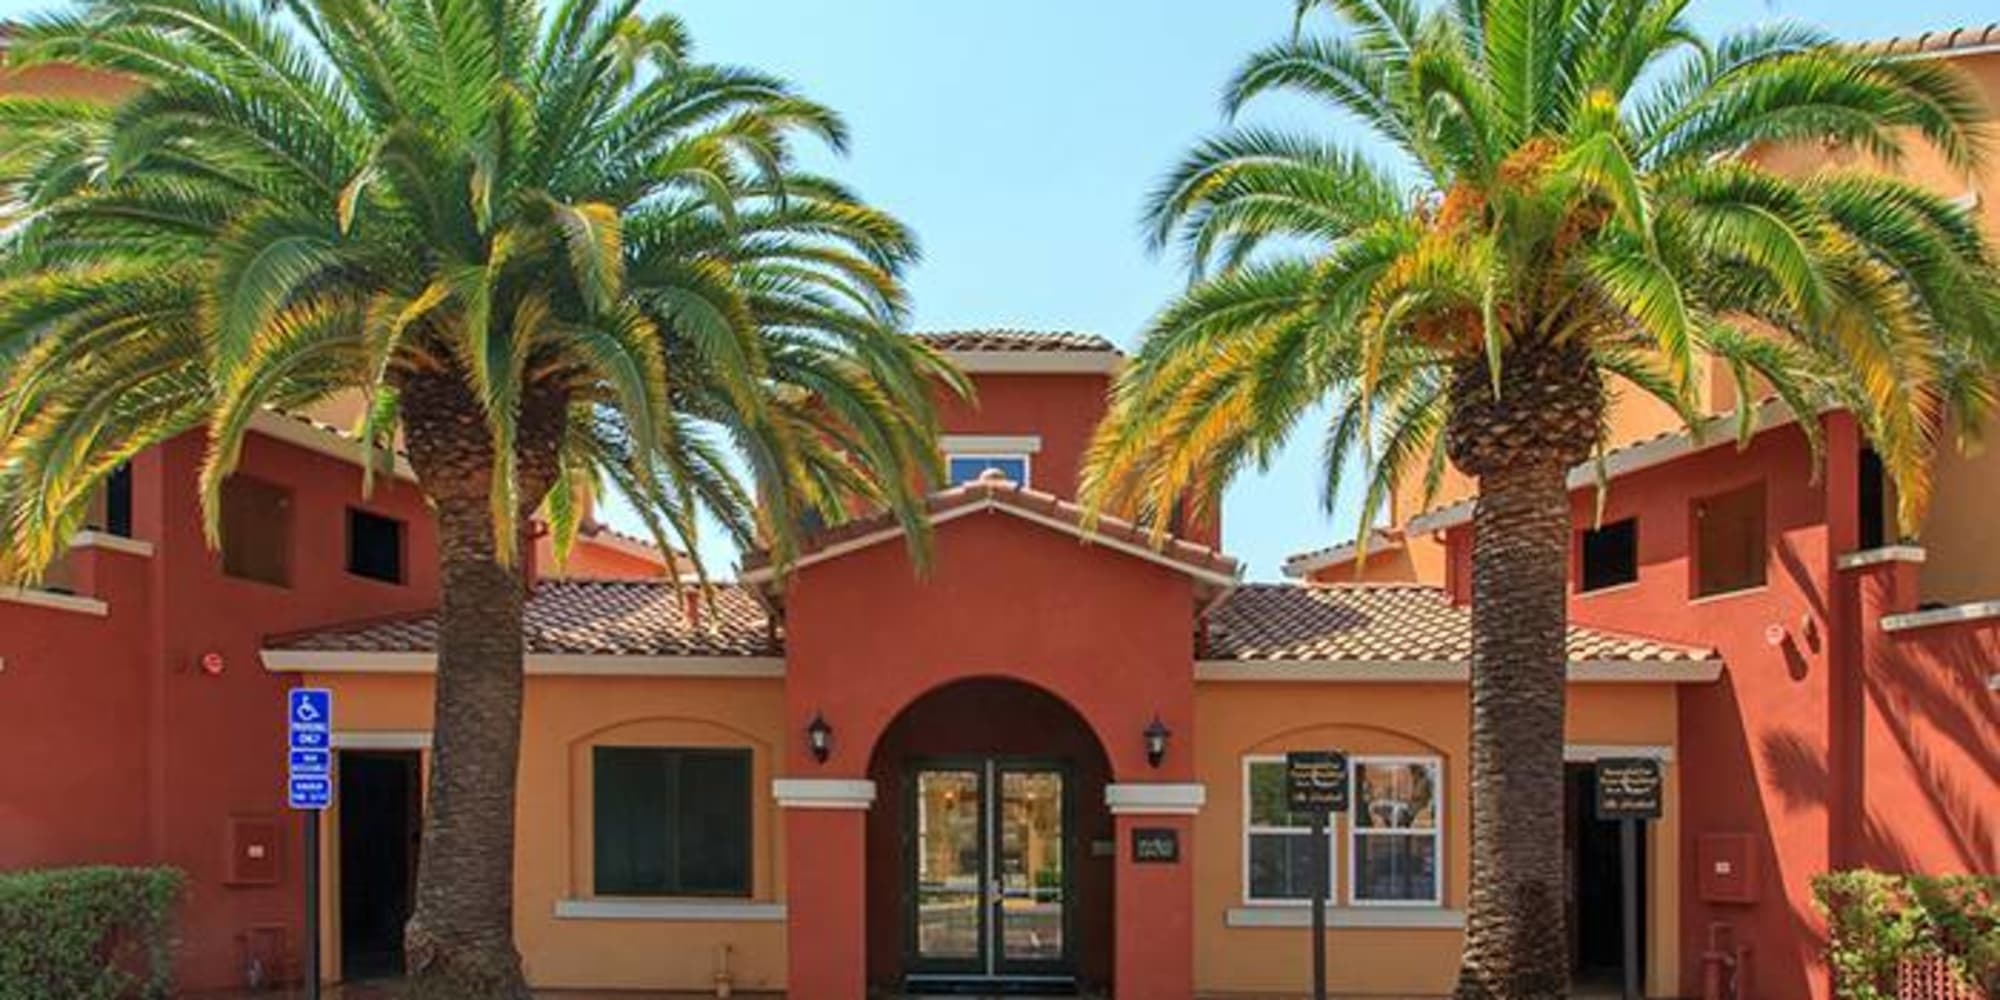 palm tree entrance at The Overlook at Fountaingrove in Santa Rosa, California